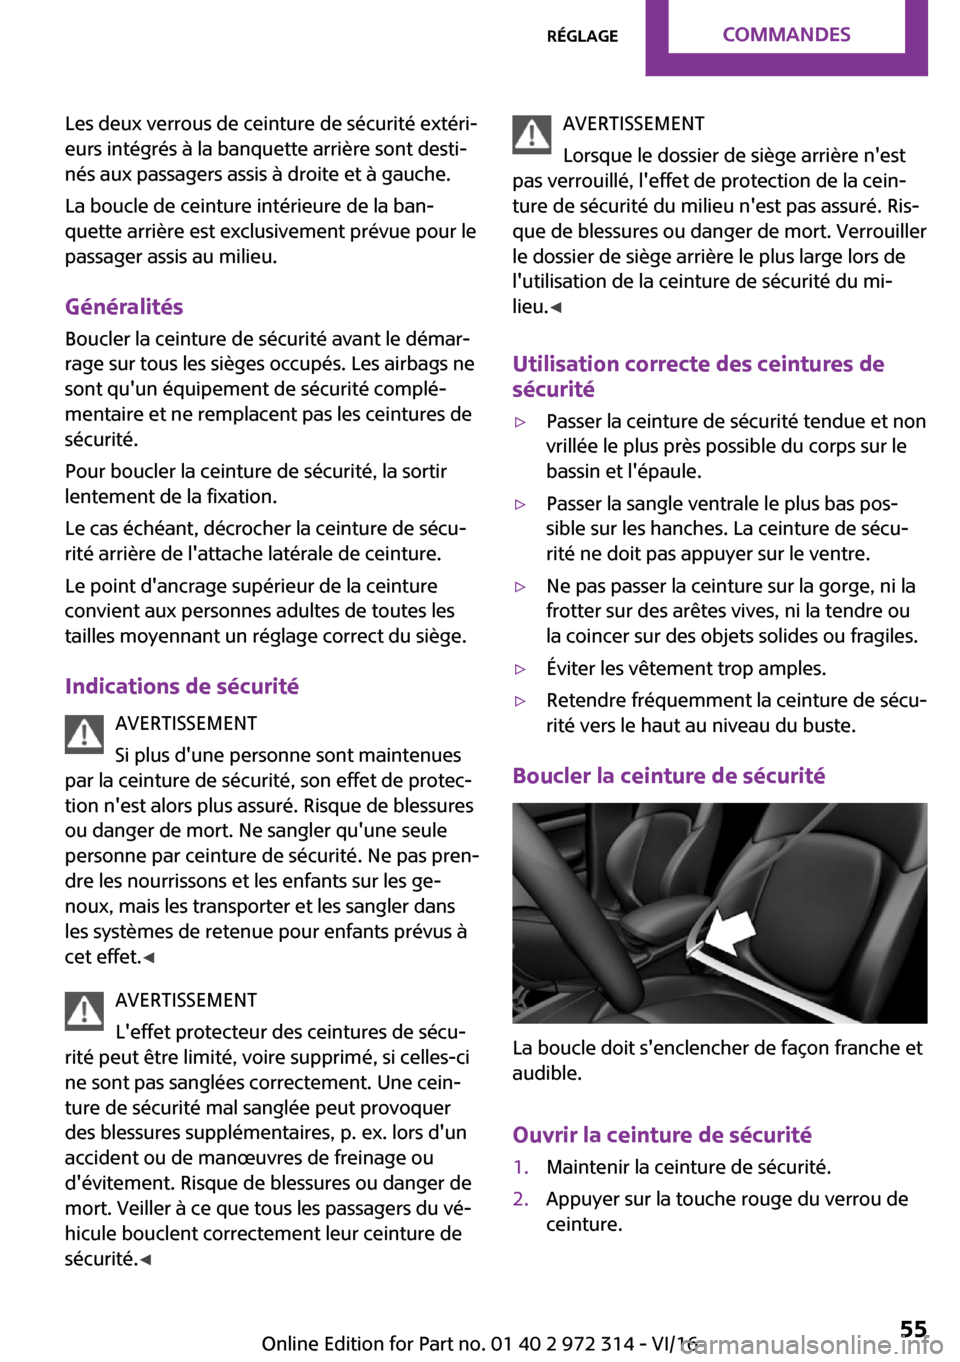 MINI 5 door 2016  Manuel du propriétaire (in French) �L�e�s� �d�e�u�x� �v�e�r�r�o�u�s� �d�e� �c�e�i�n�t�u�r�e� �d�e� �s�é�c�u�r�i�t�é� �e�x�t�é�r�i~
�e�u�r�s� �i�n�t�é�g�r�é�s� �